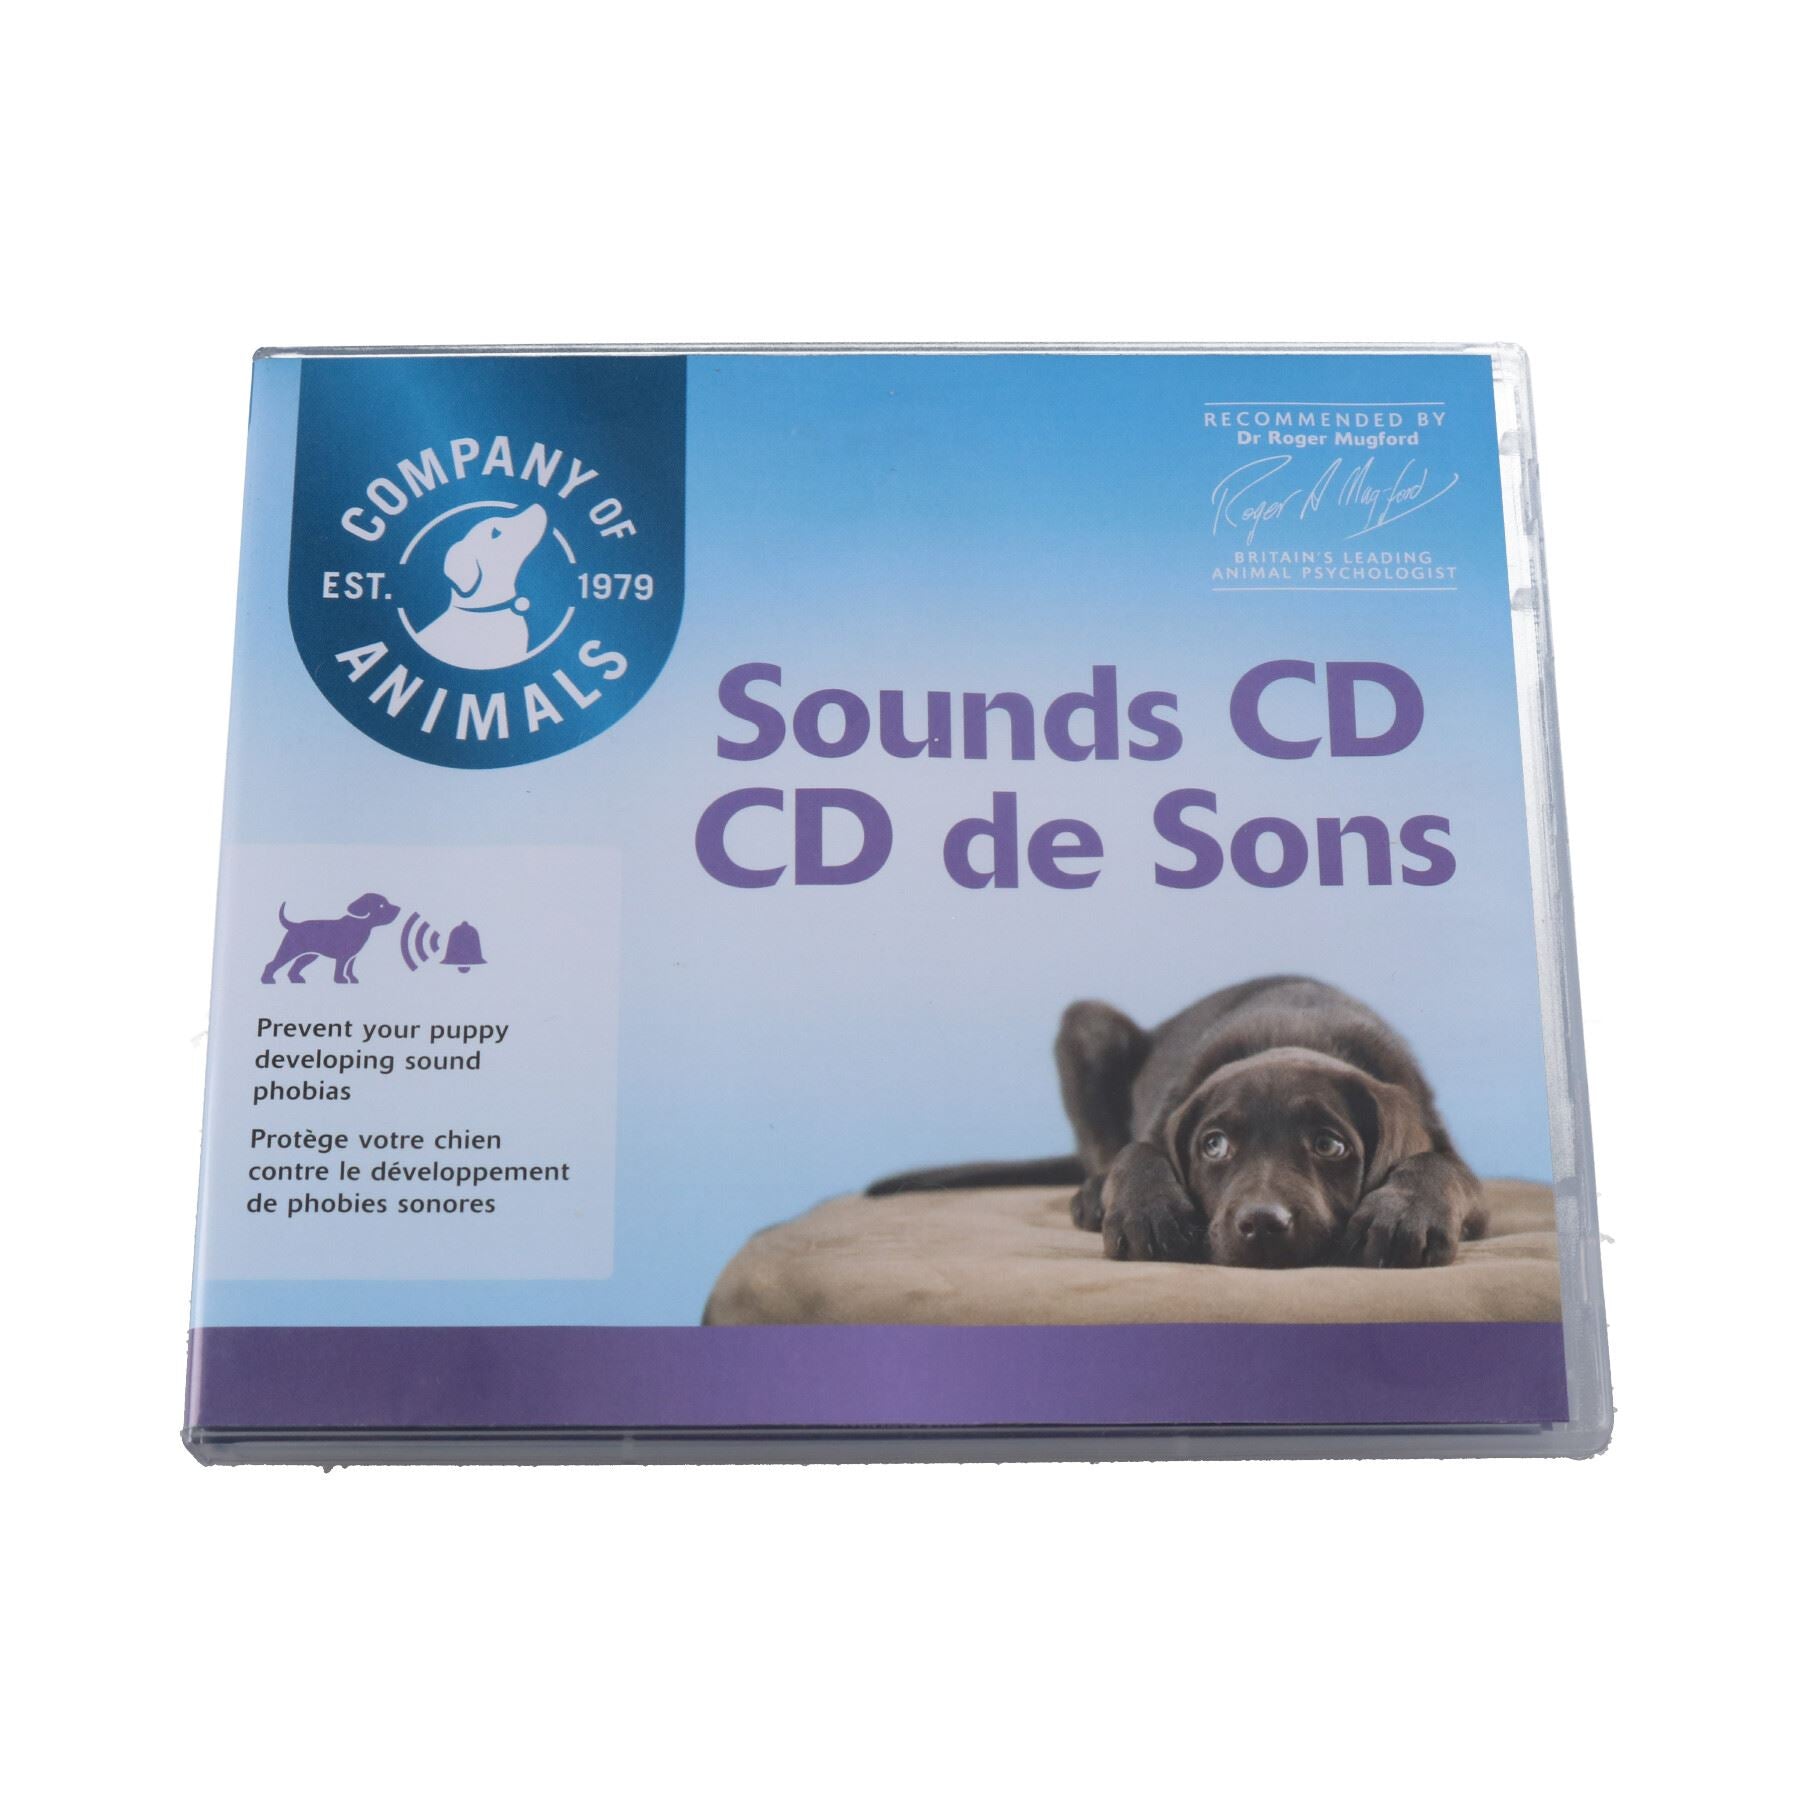 Everyday Sound CD New Puppy Dog Training Aid Help Prevent Sound Phobias